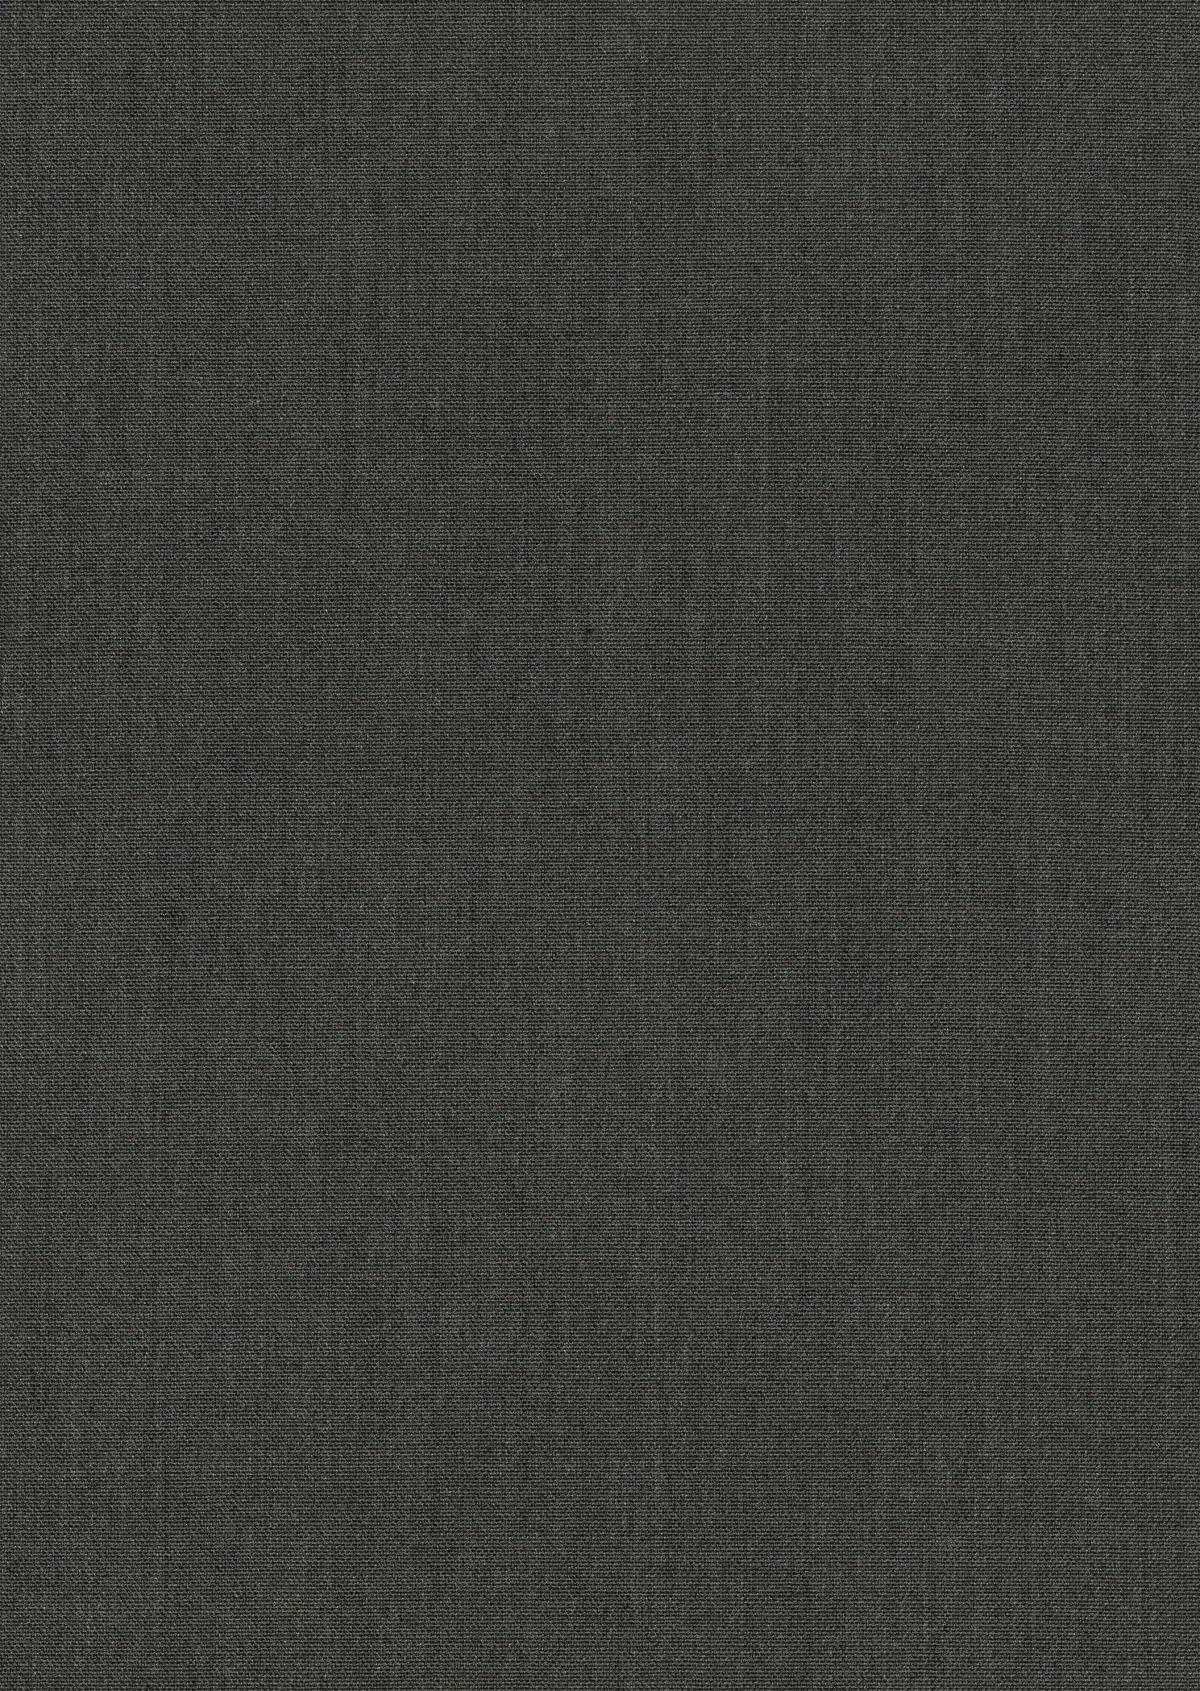 Fabric sample Remix 3 163 grey